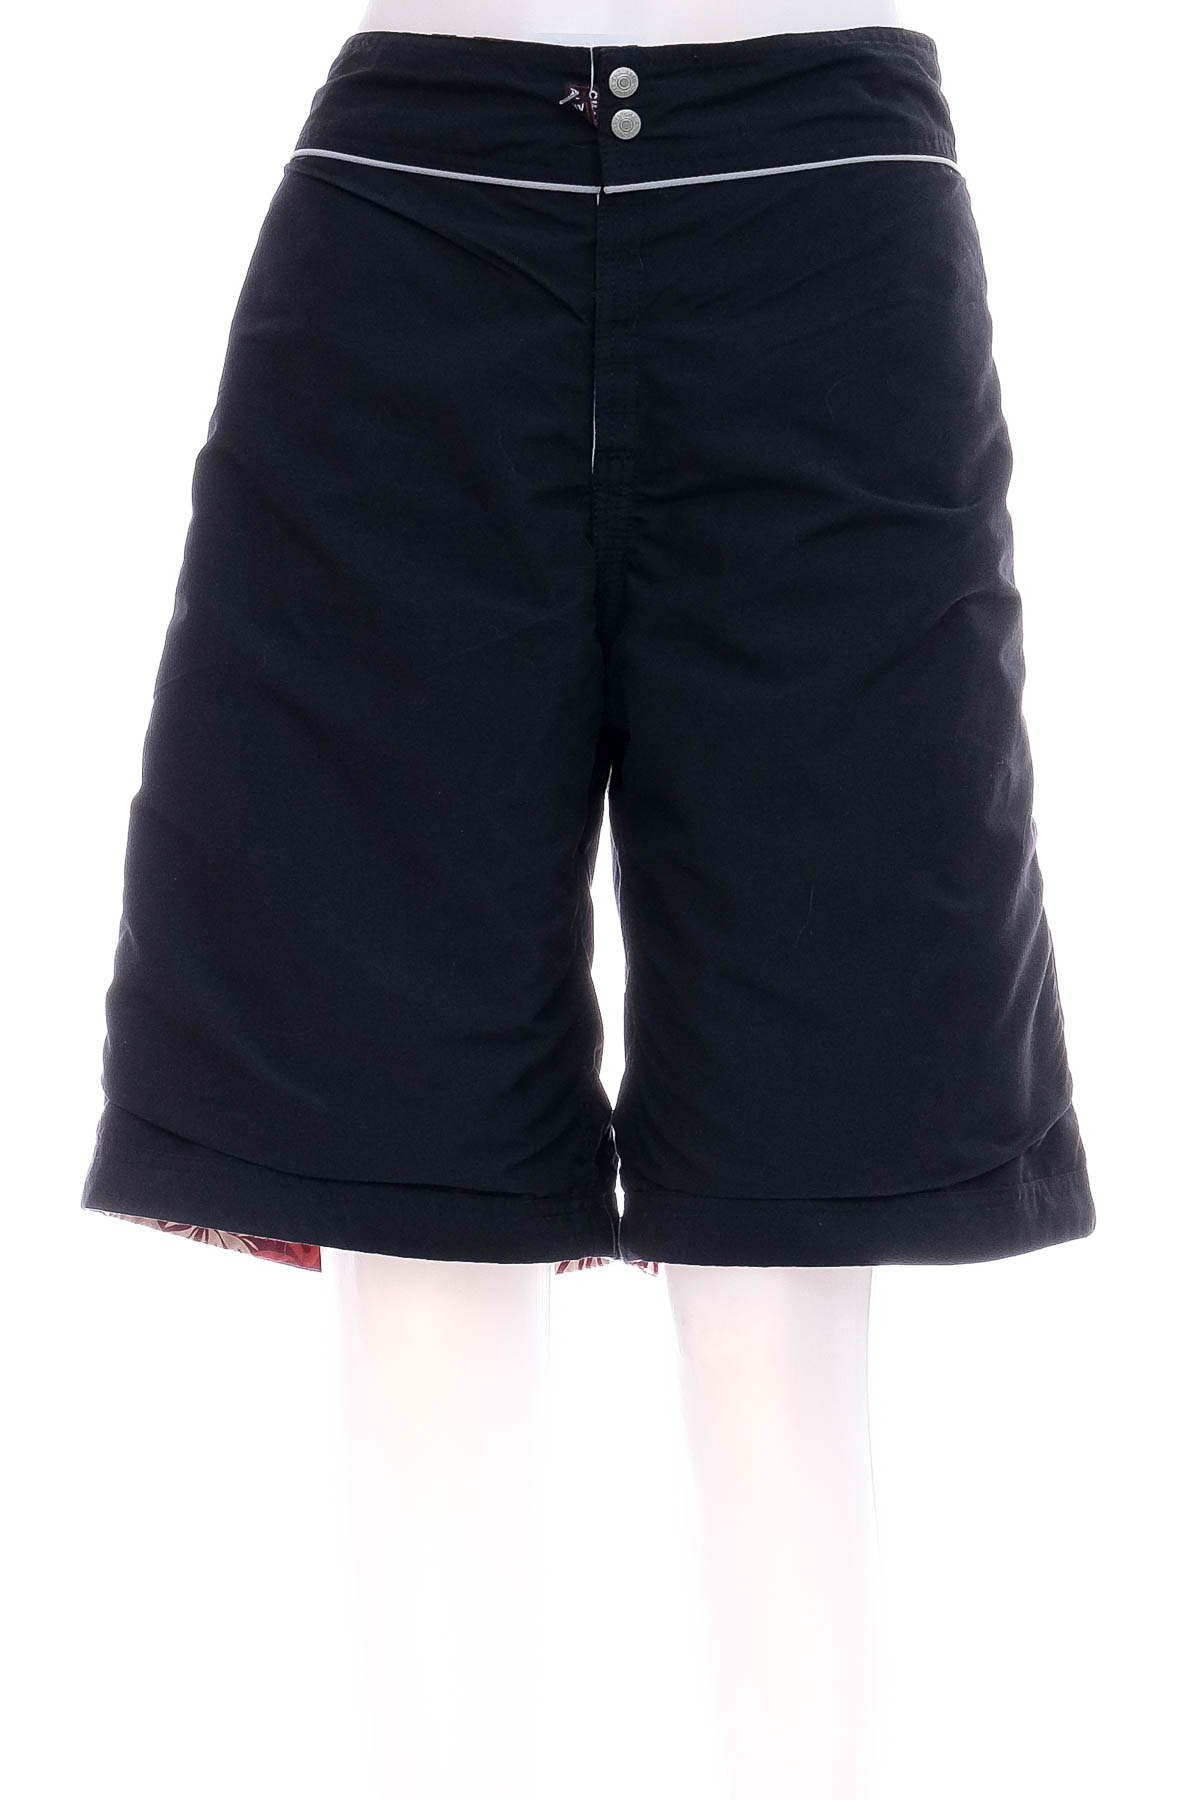 Men's shorts reversible - CHAI AREE - 1